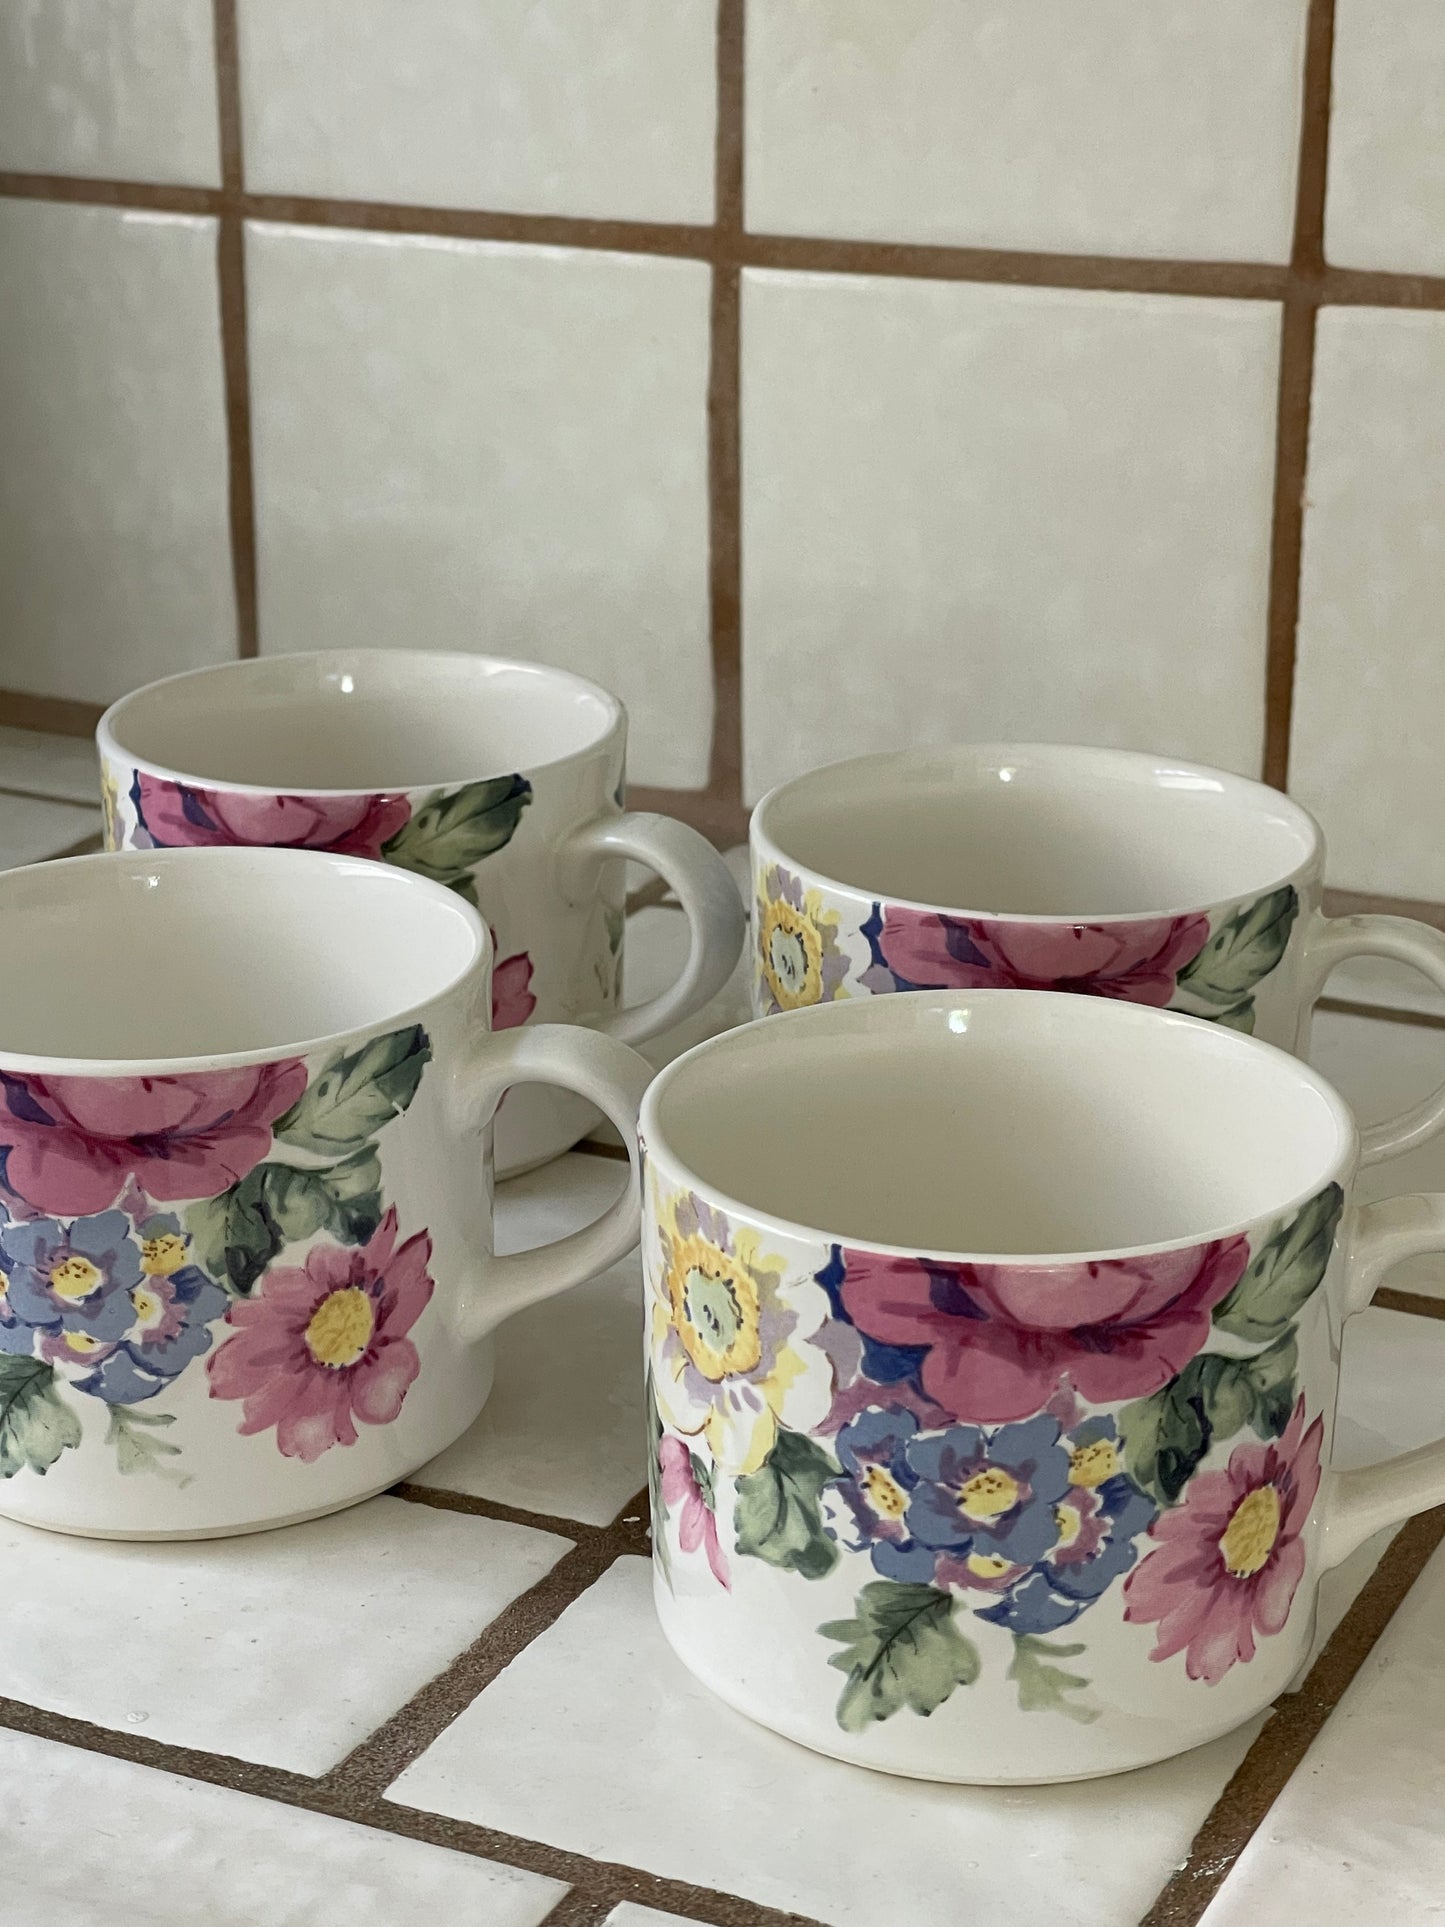 Darby Coffee Mugs, Set of 4